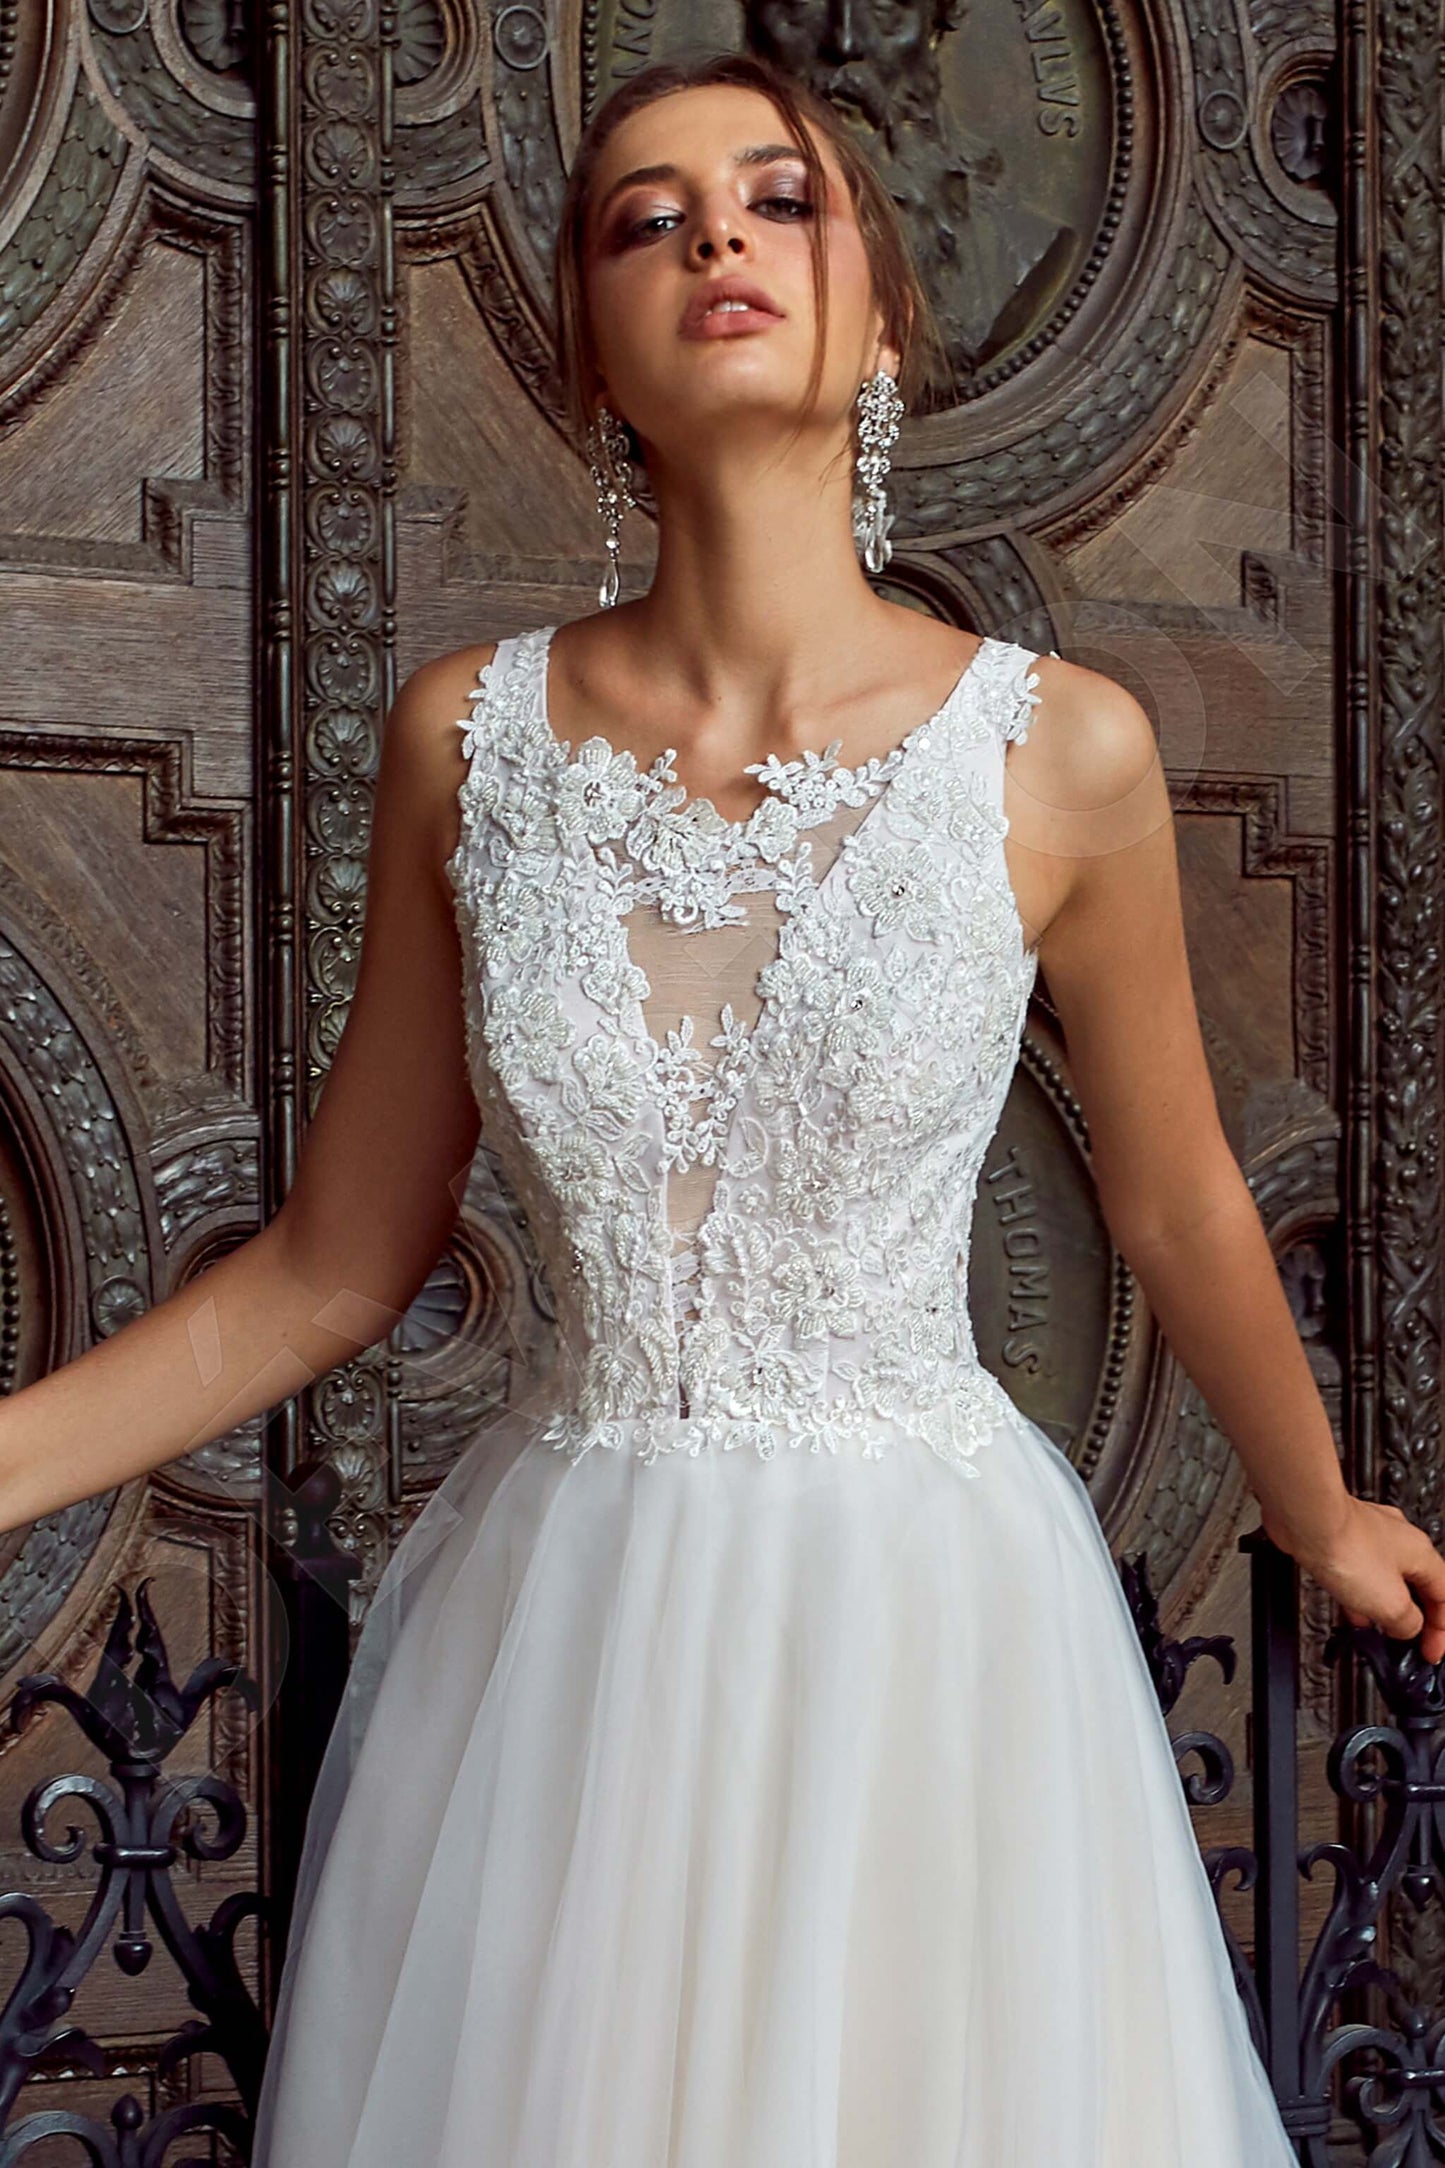 Gelaria Open back A-line Sleeveless Wedding Dress 2